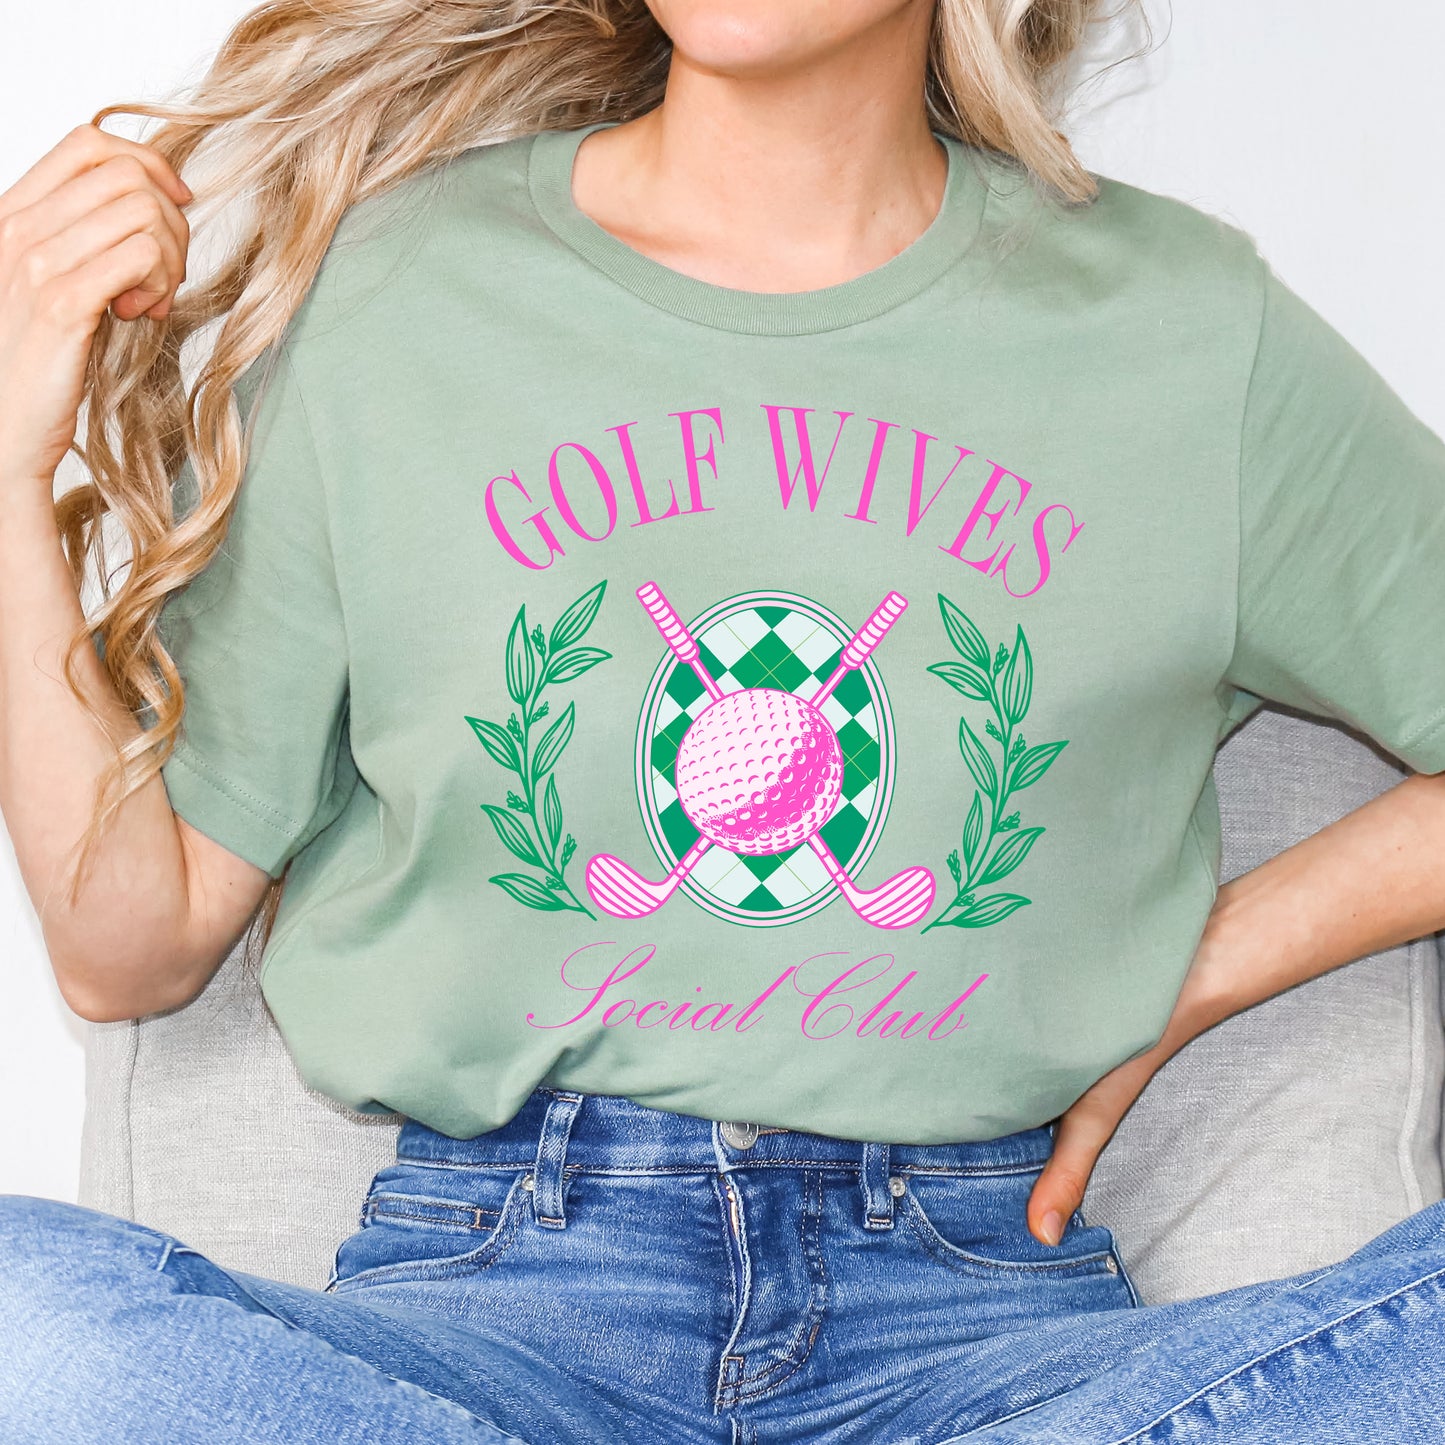 Golf Wives Social Club |Short Sleeve Crew Neck